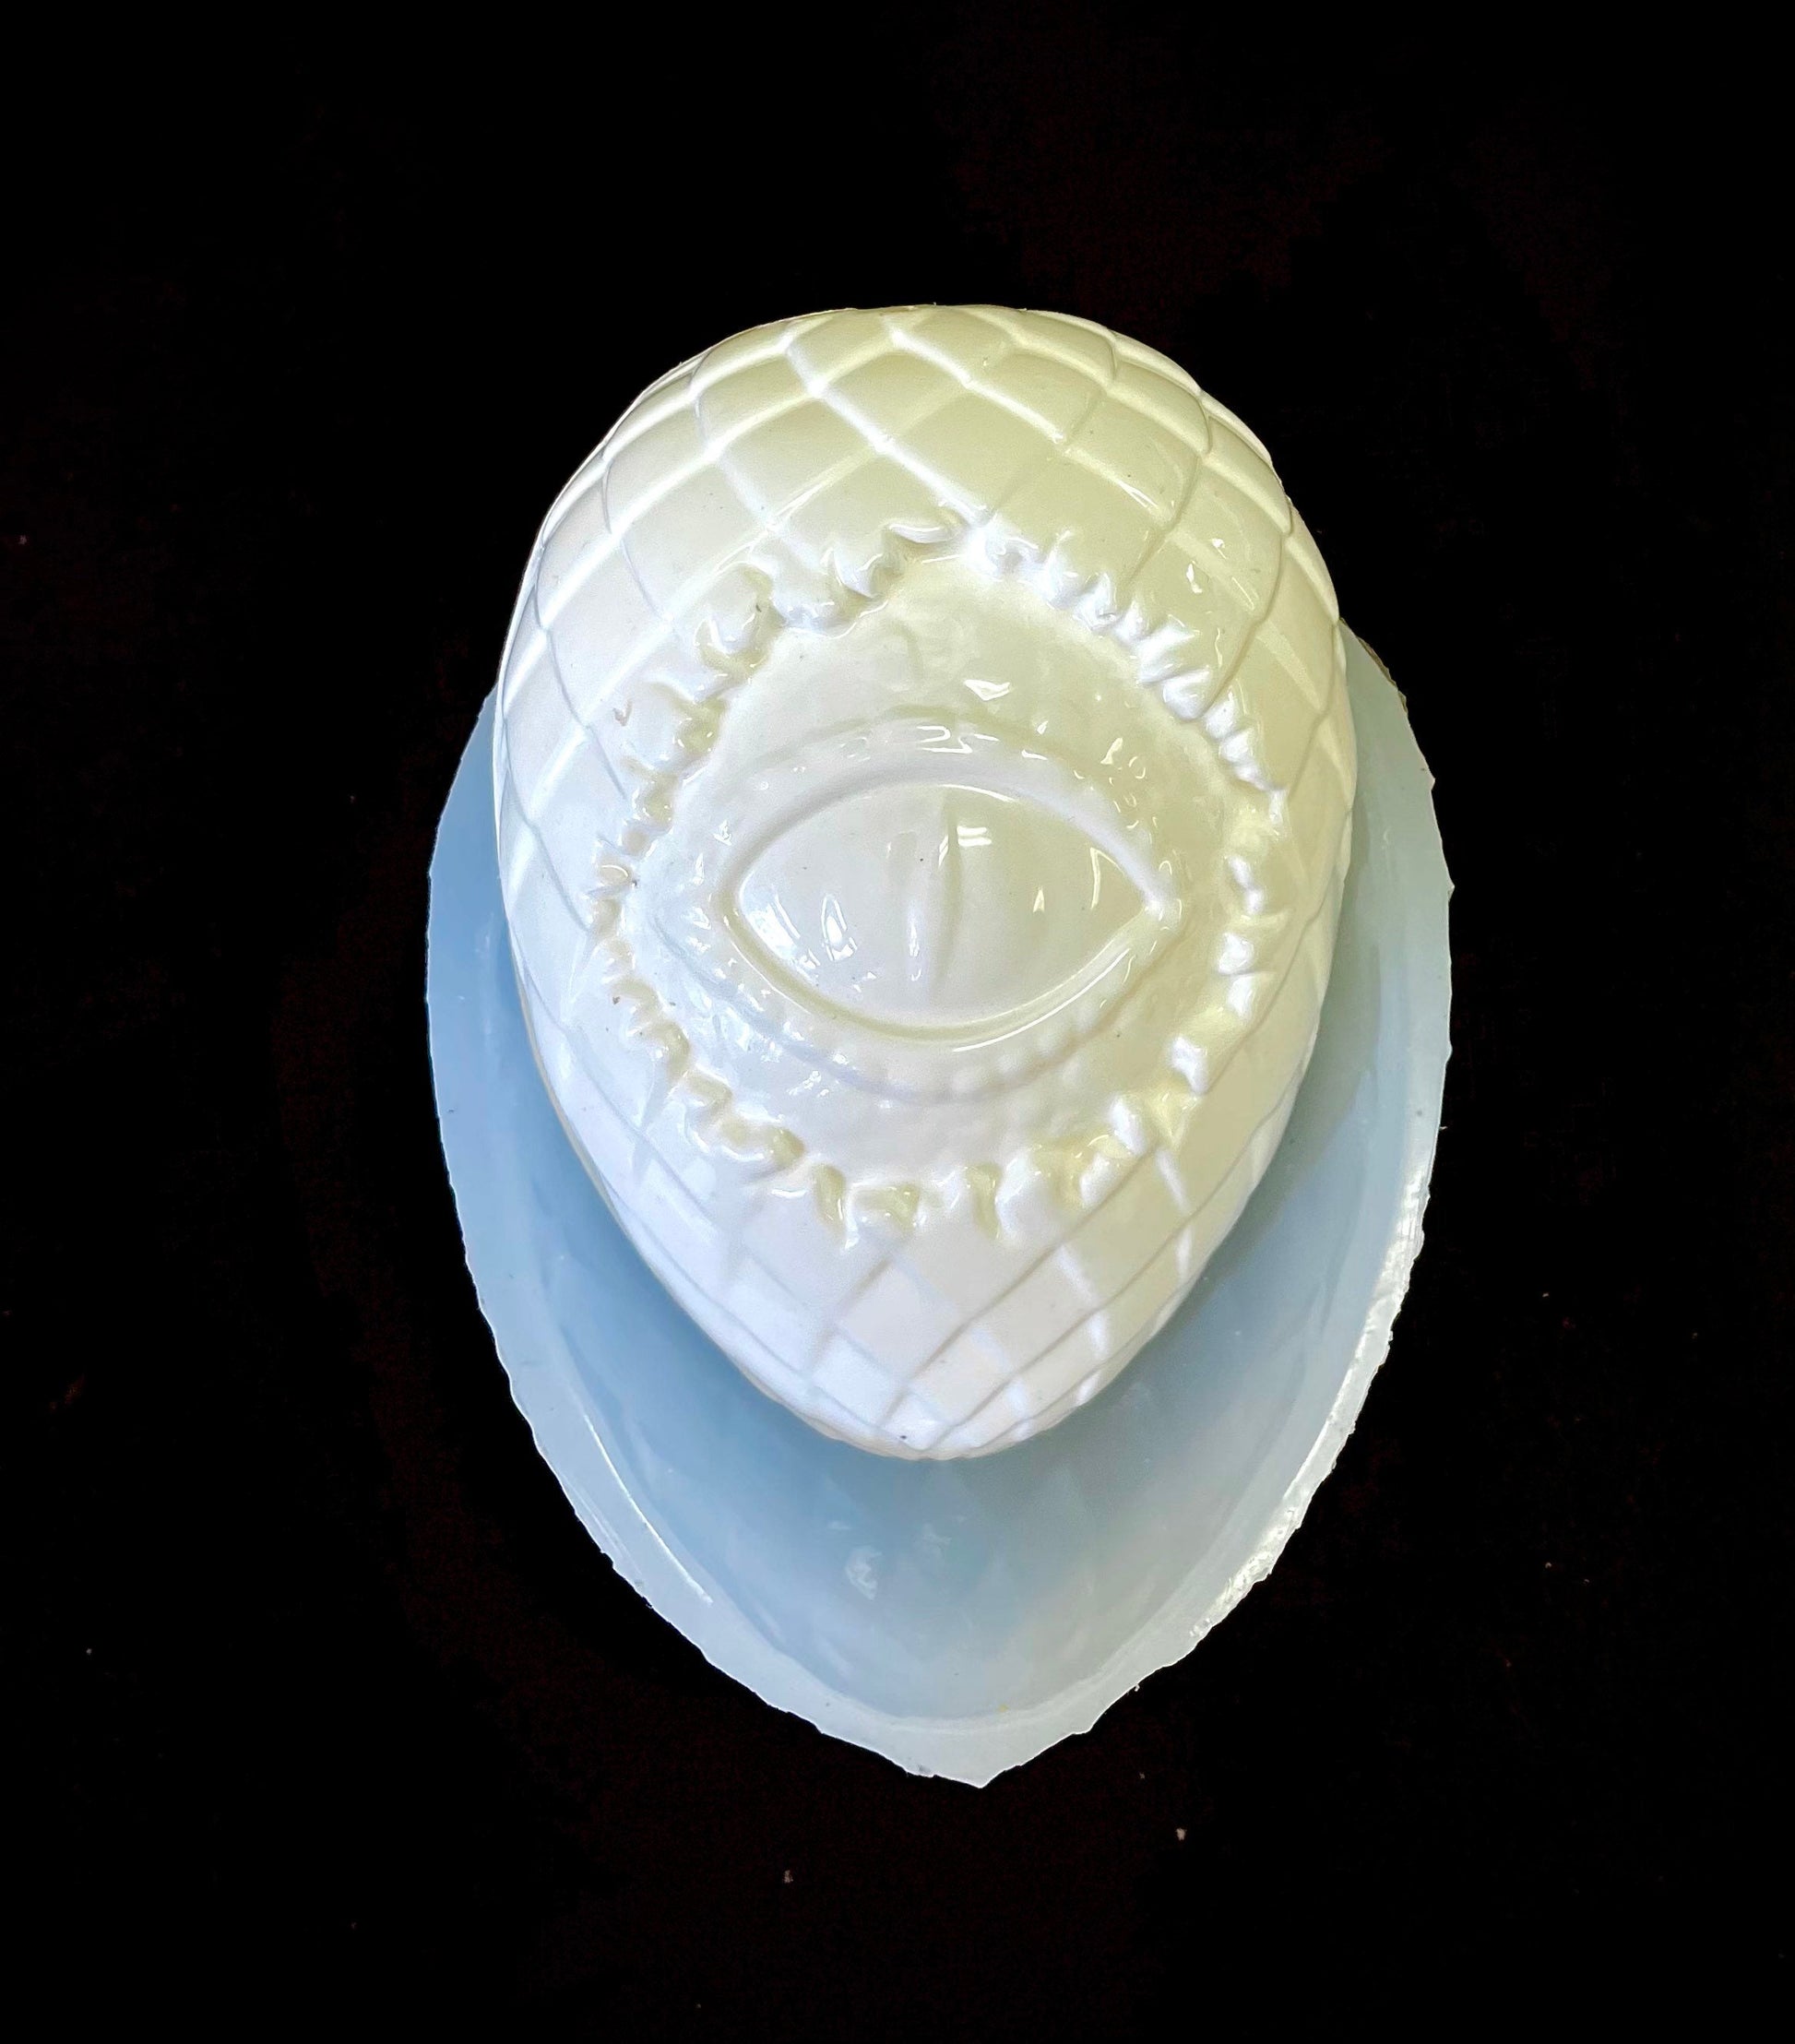 Dragon eye soap resin mold- lotion bar mold - chocolate mold